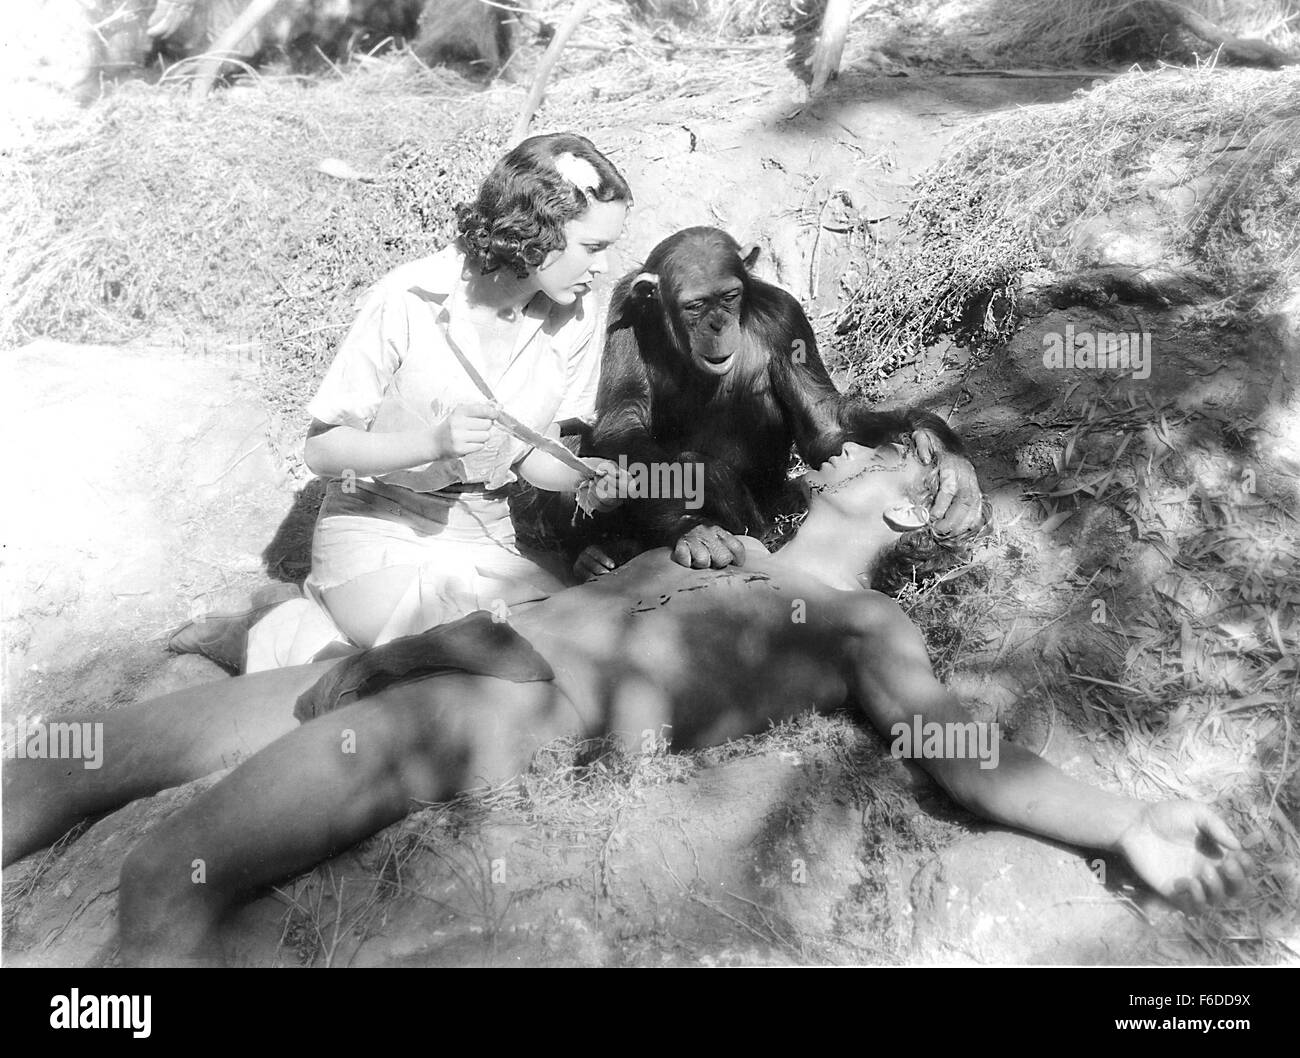 RELEASE DATE: April 2, 1932. MOVIE TITLE: Tarzan the Ape Man. STUDIO: Metro-Goldwyn-Mayer (Credit Image: Entertainment Pictures) Stock Photo